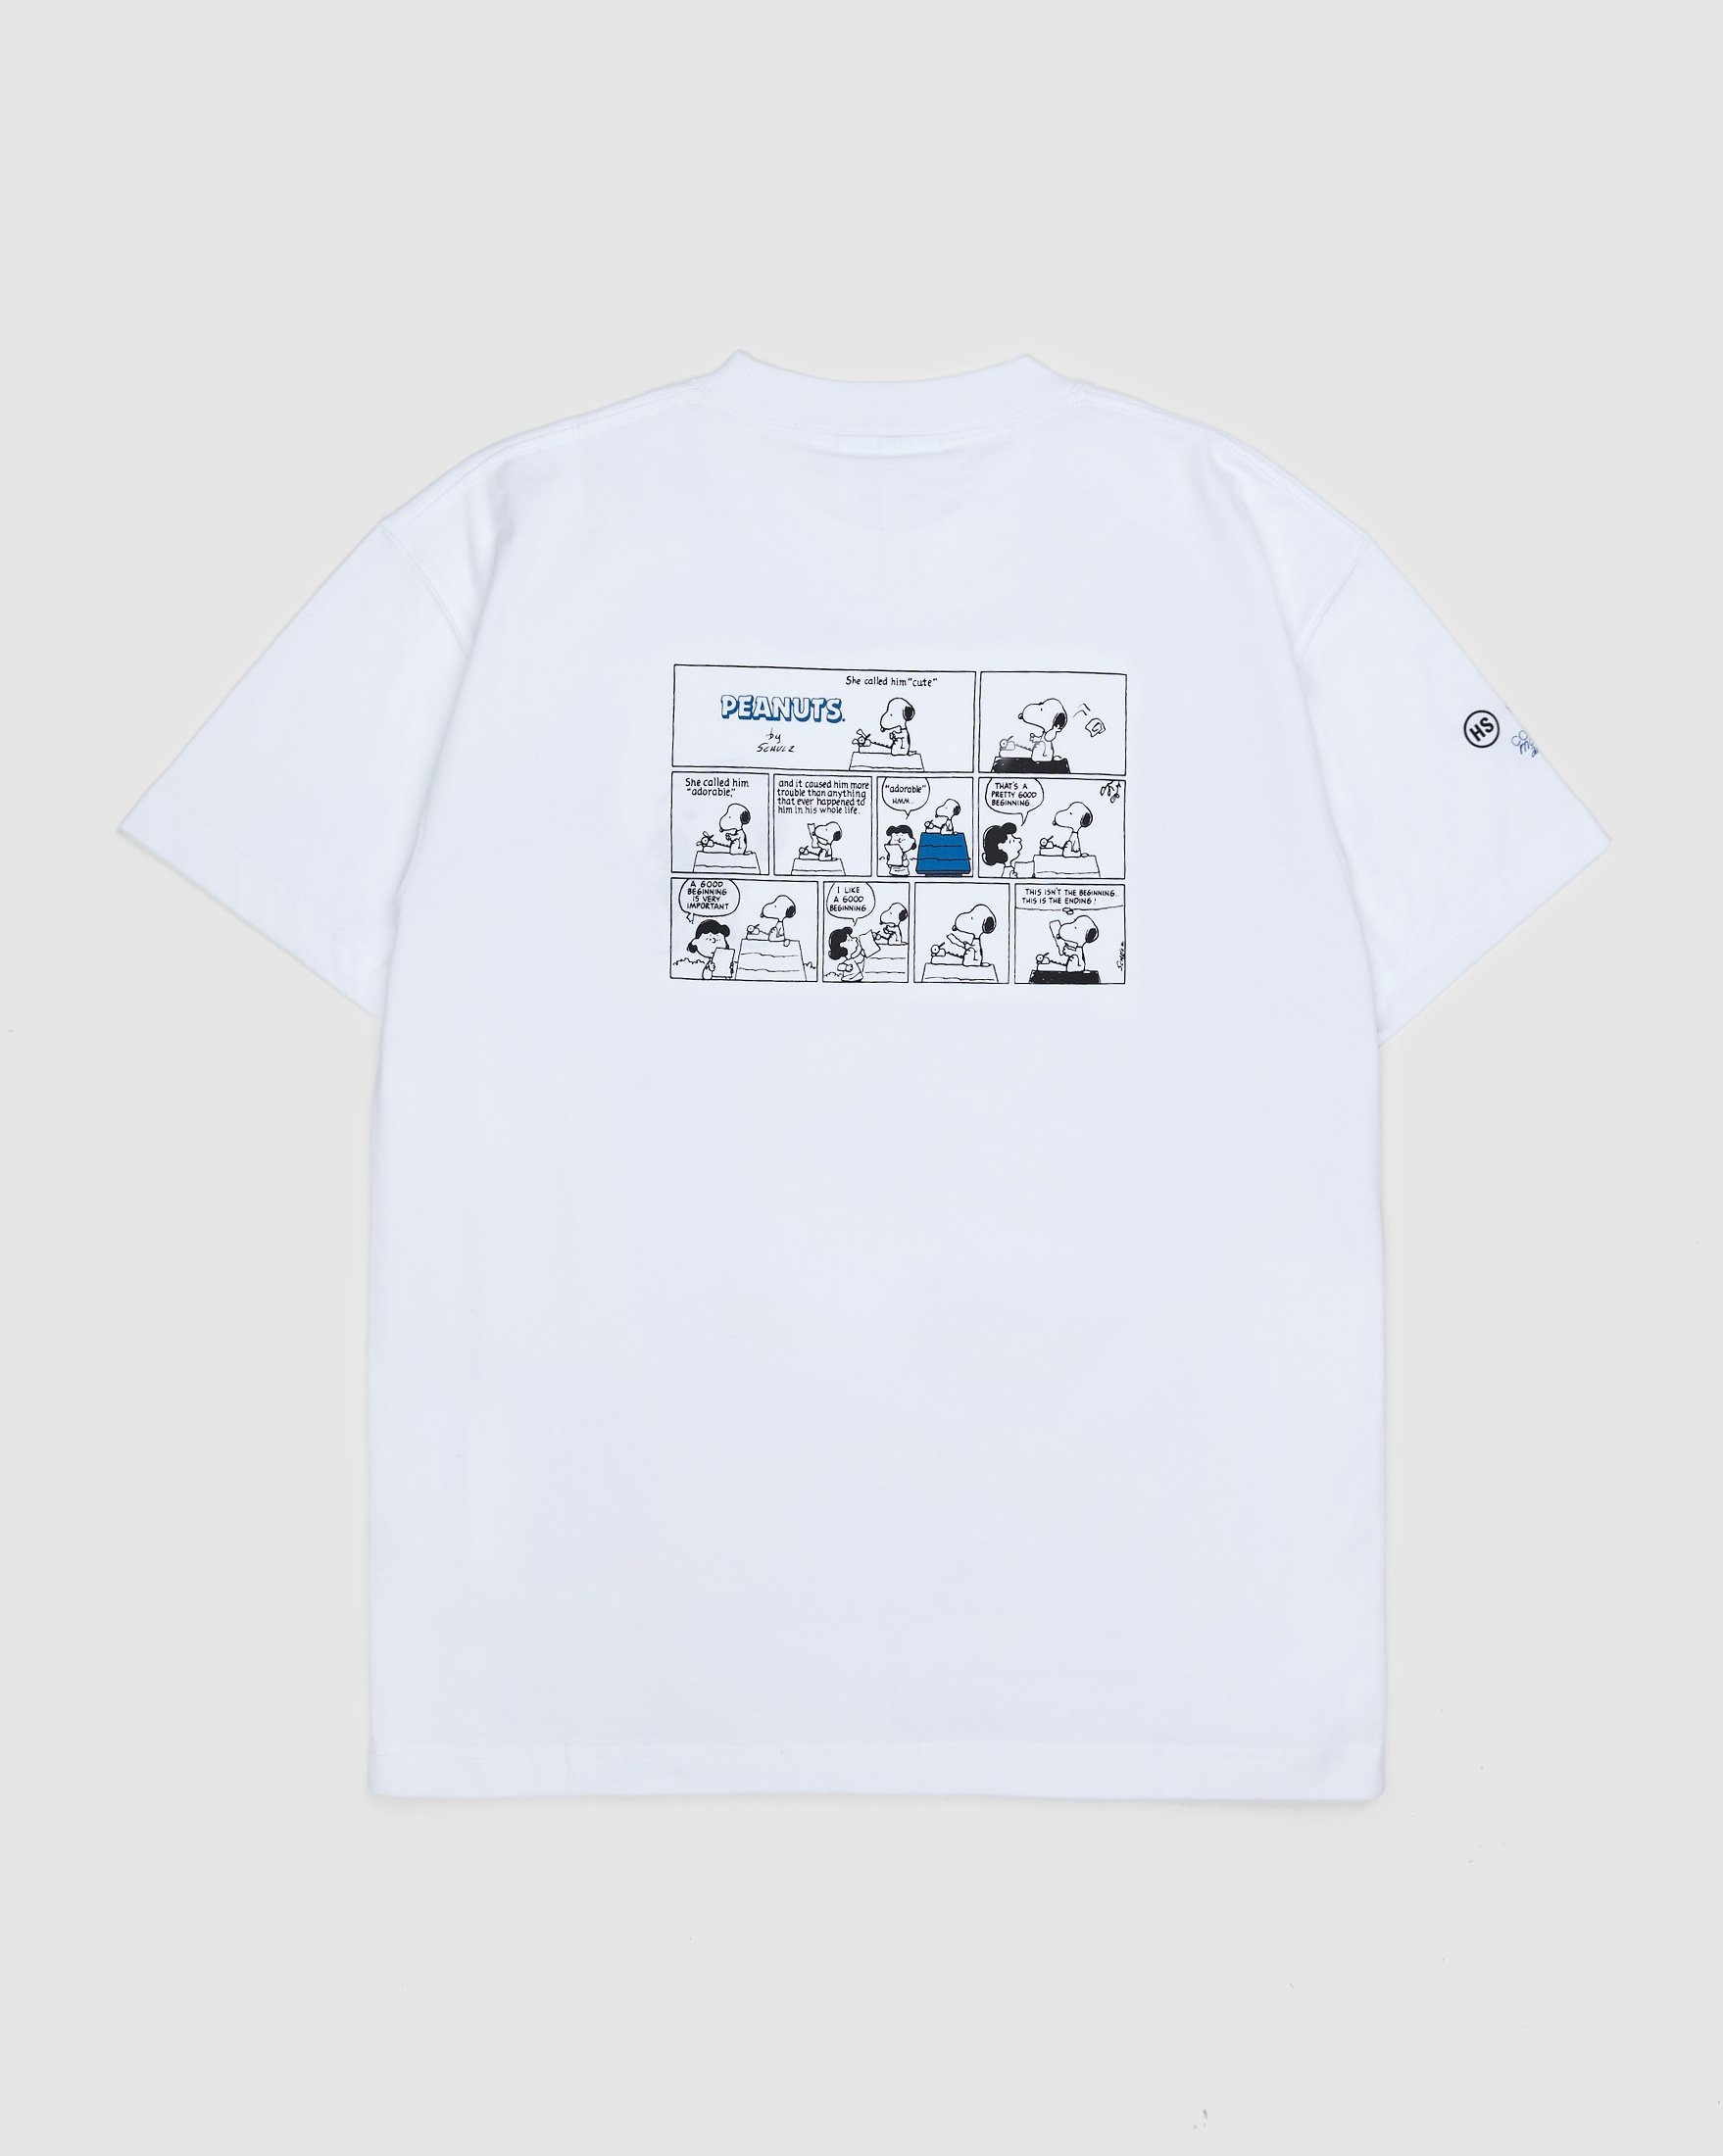 Colette Mon Amour x Soulland – Snoopy Comics White T-Shirt - T-shirts - White - Image 2